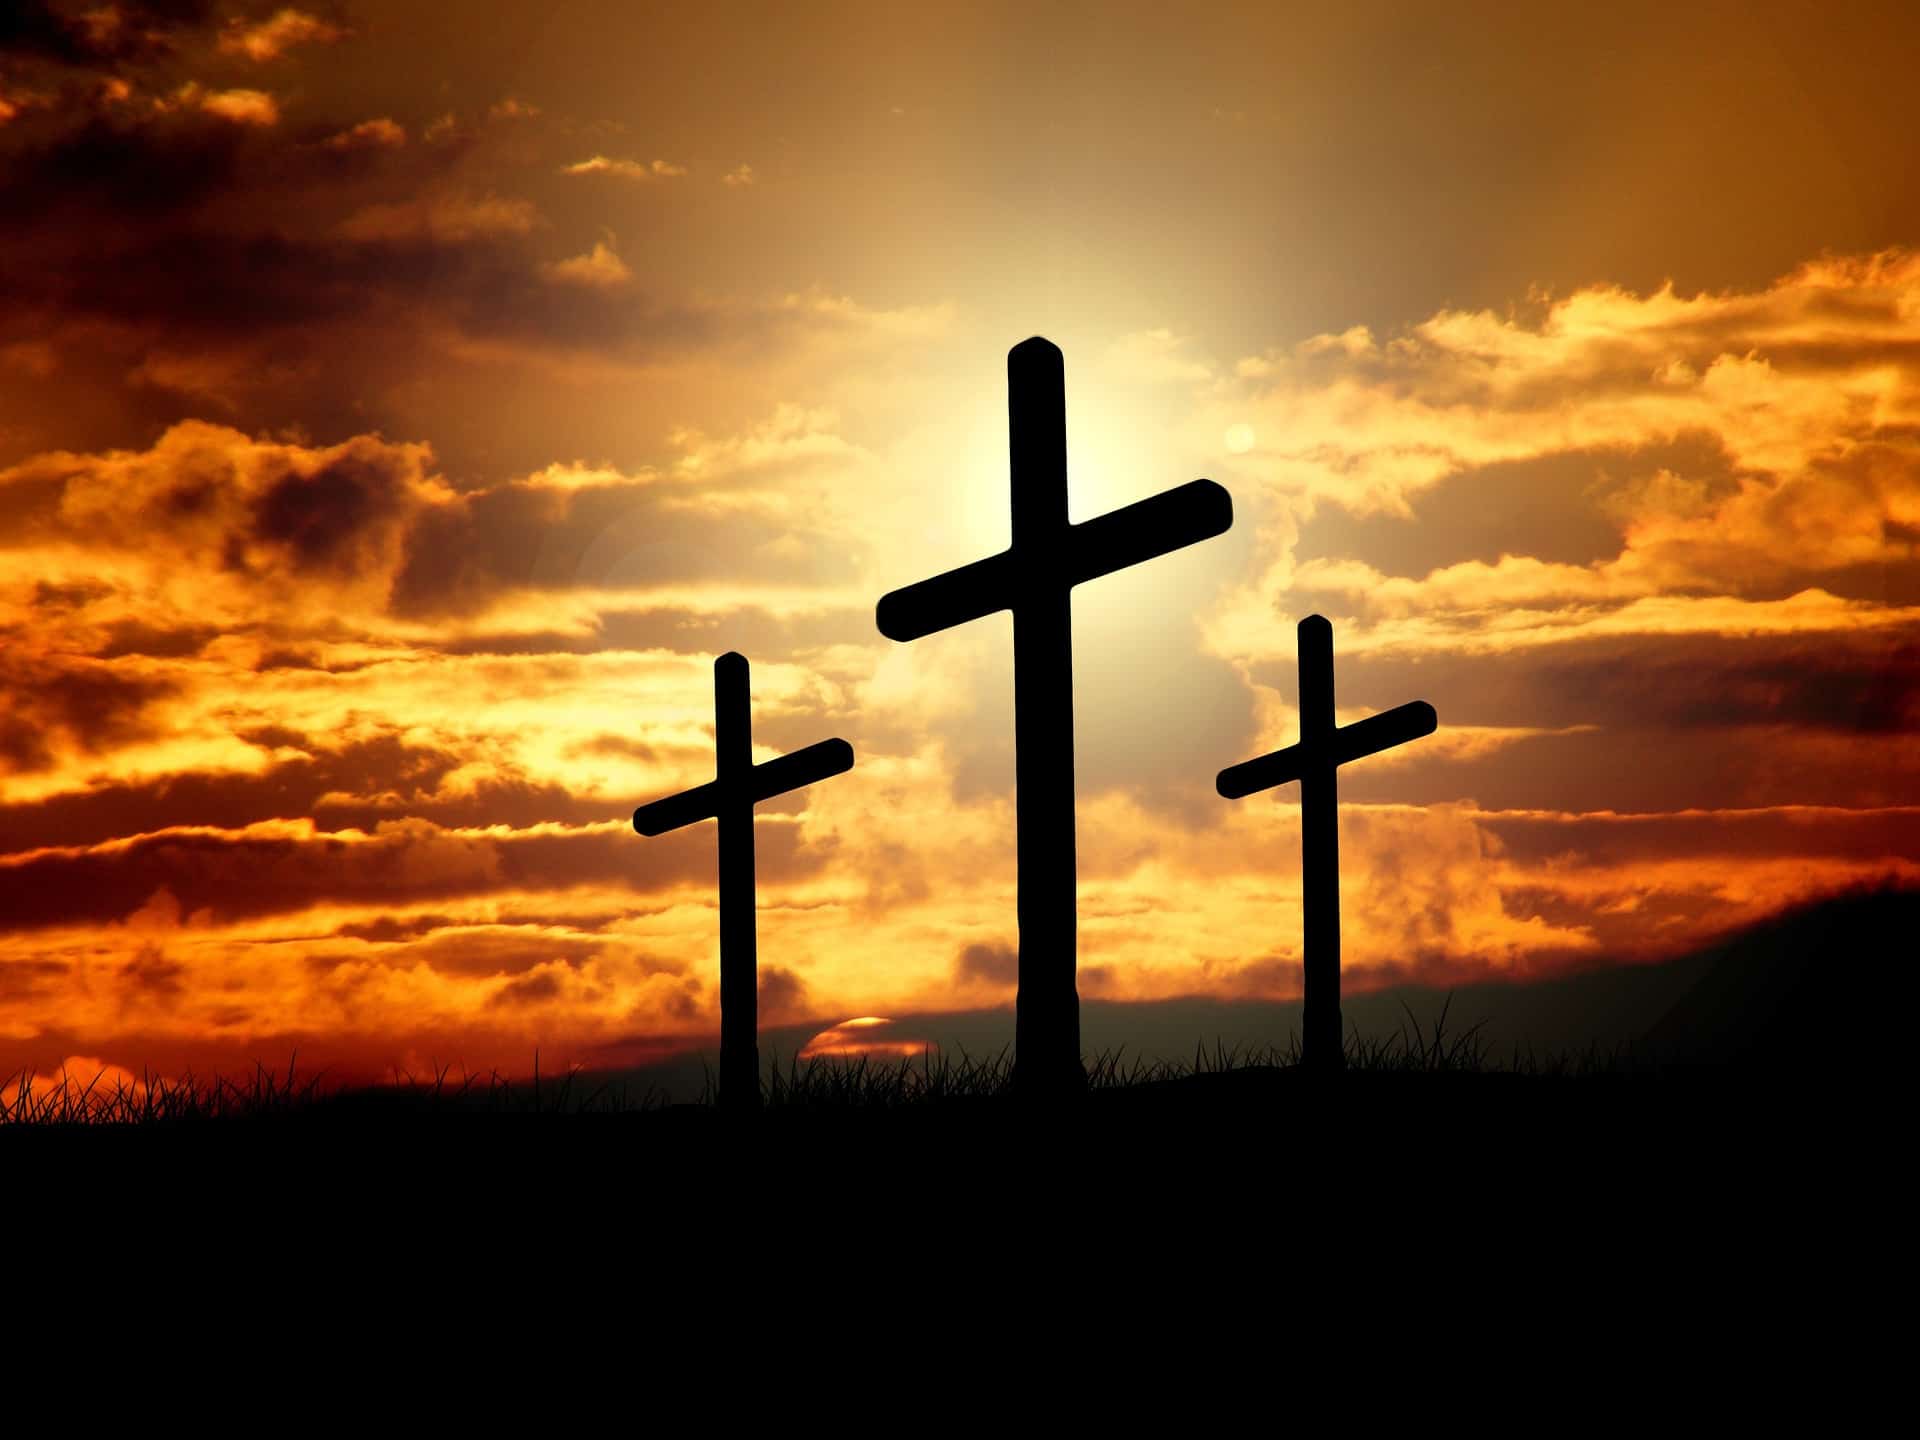 Victory through The Cross of Jesus Christ